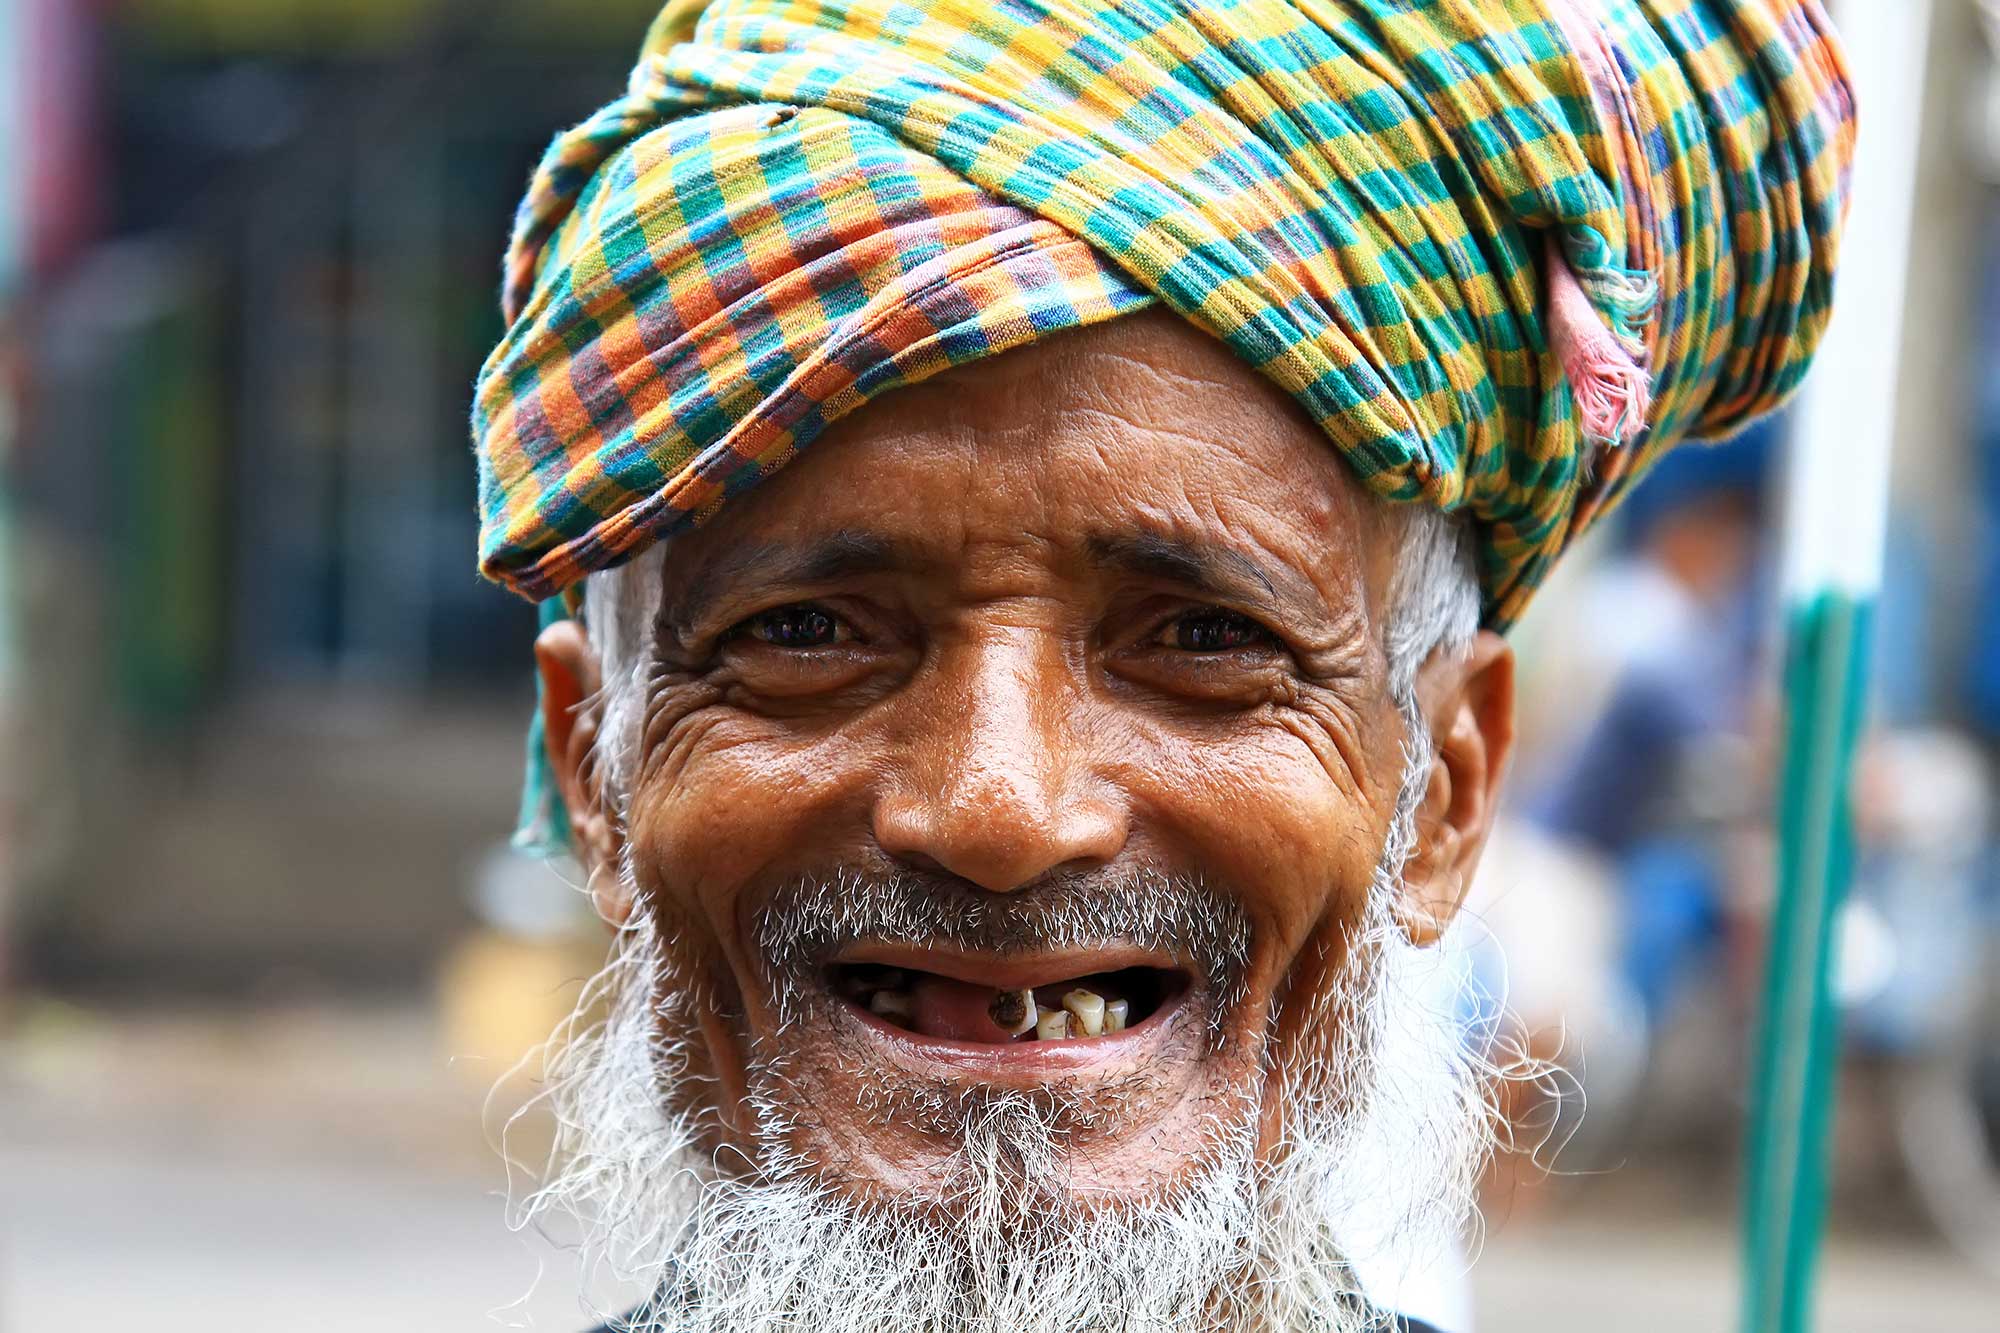 portrait-smiling-man-with-no-teeth-kolkata-india.